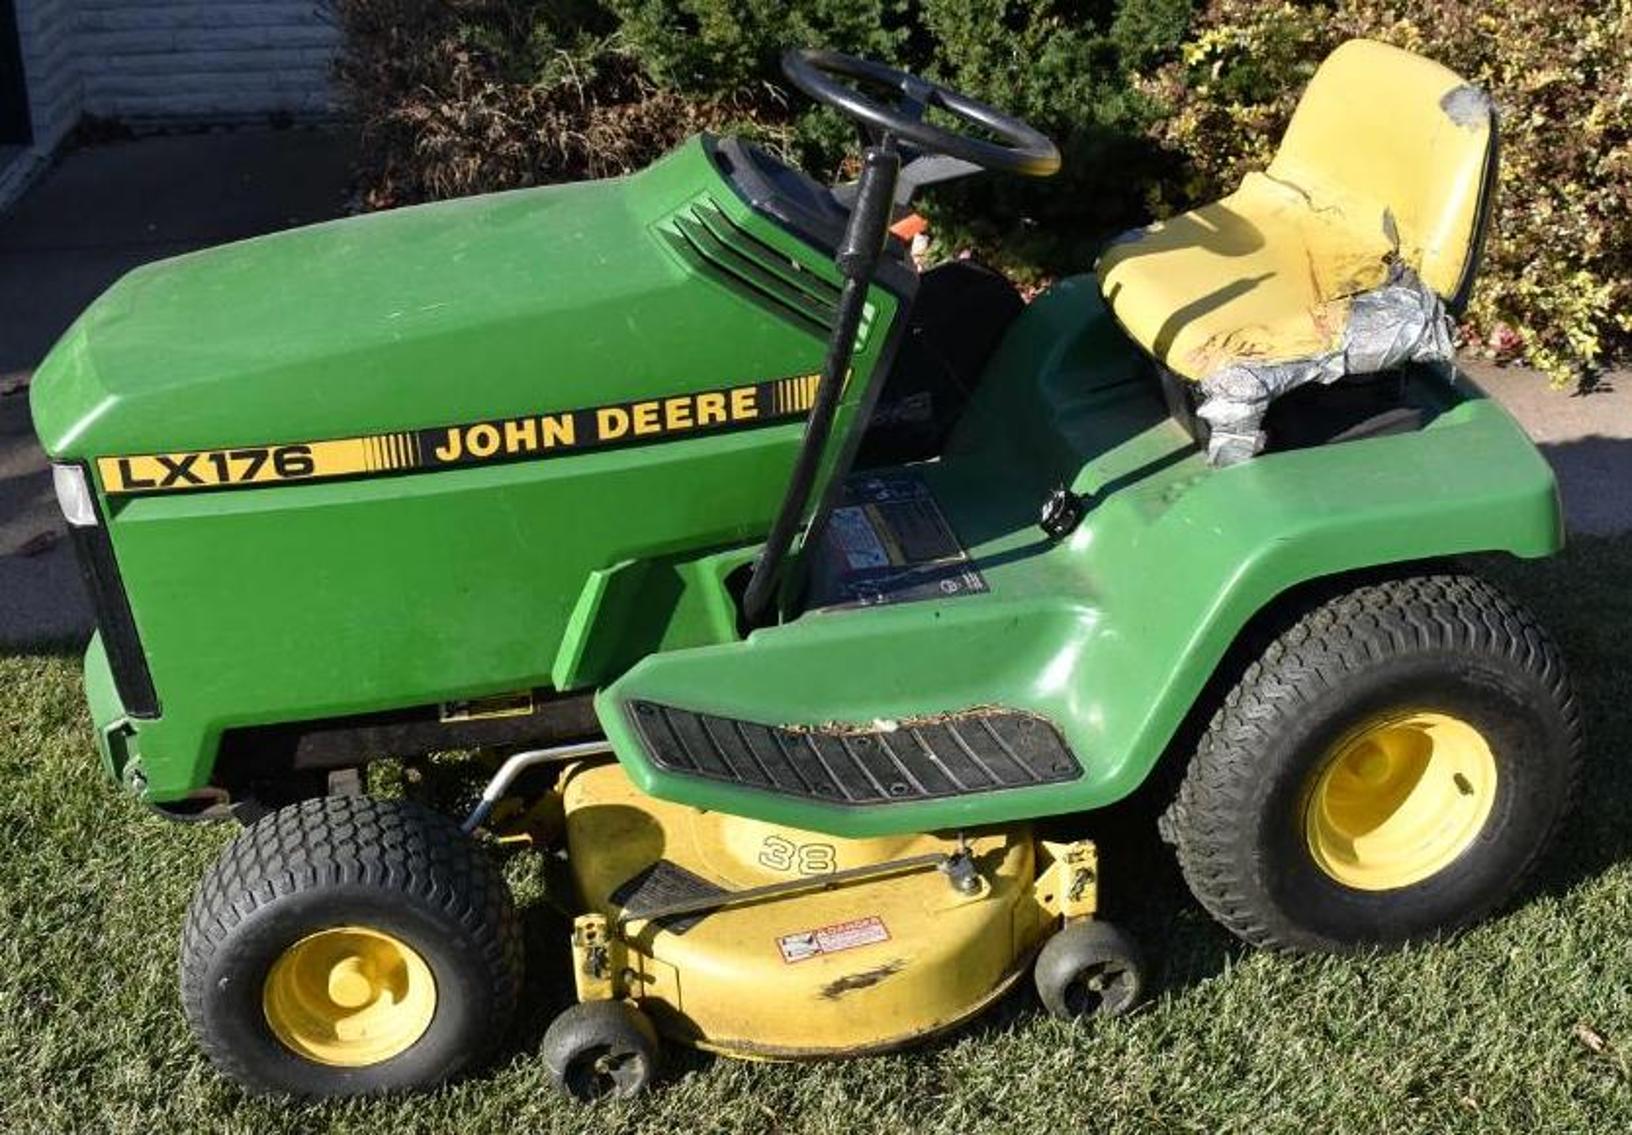 John Deere Riding Lawnmower, John Deere Snow Blower, Lawn and Garden, Appliances, Household and More